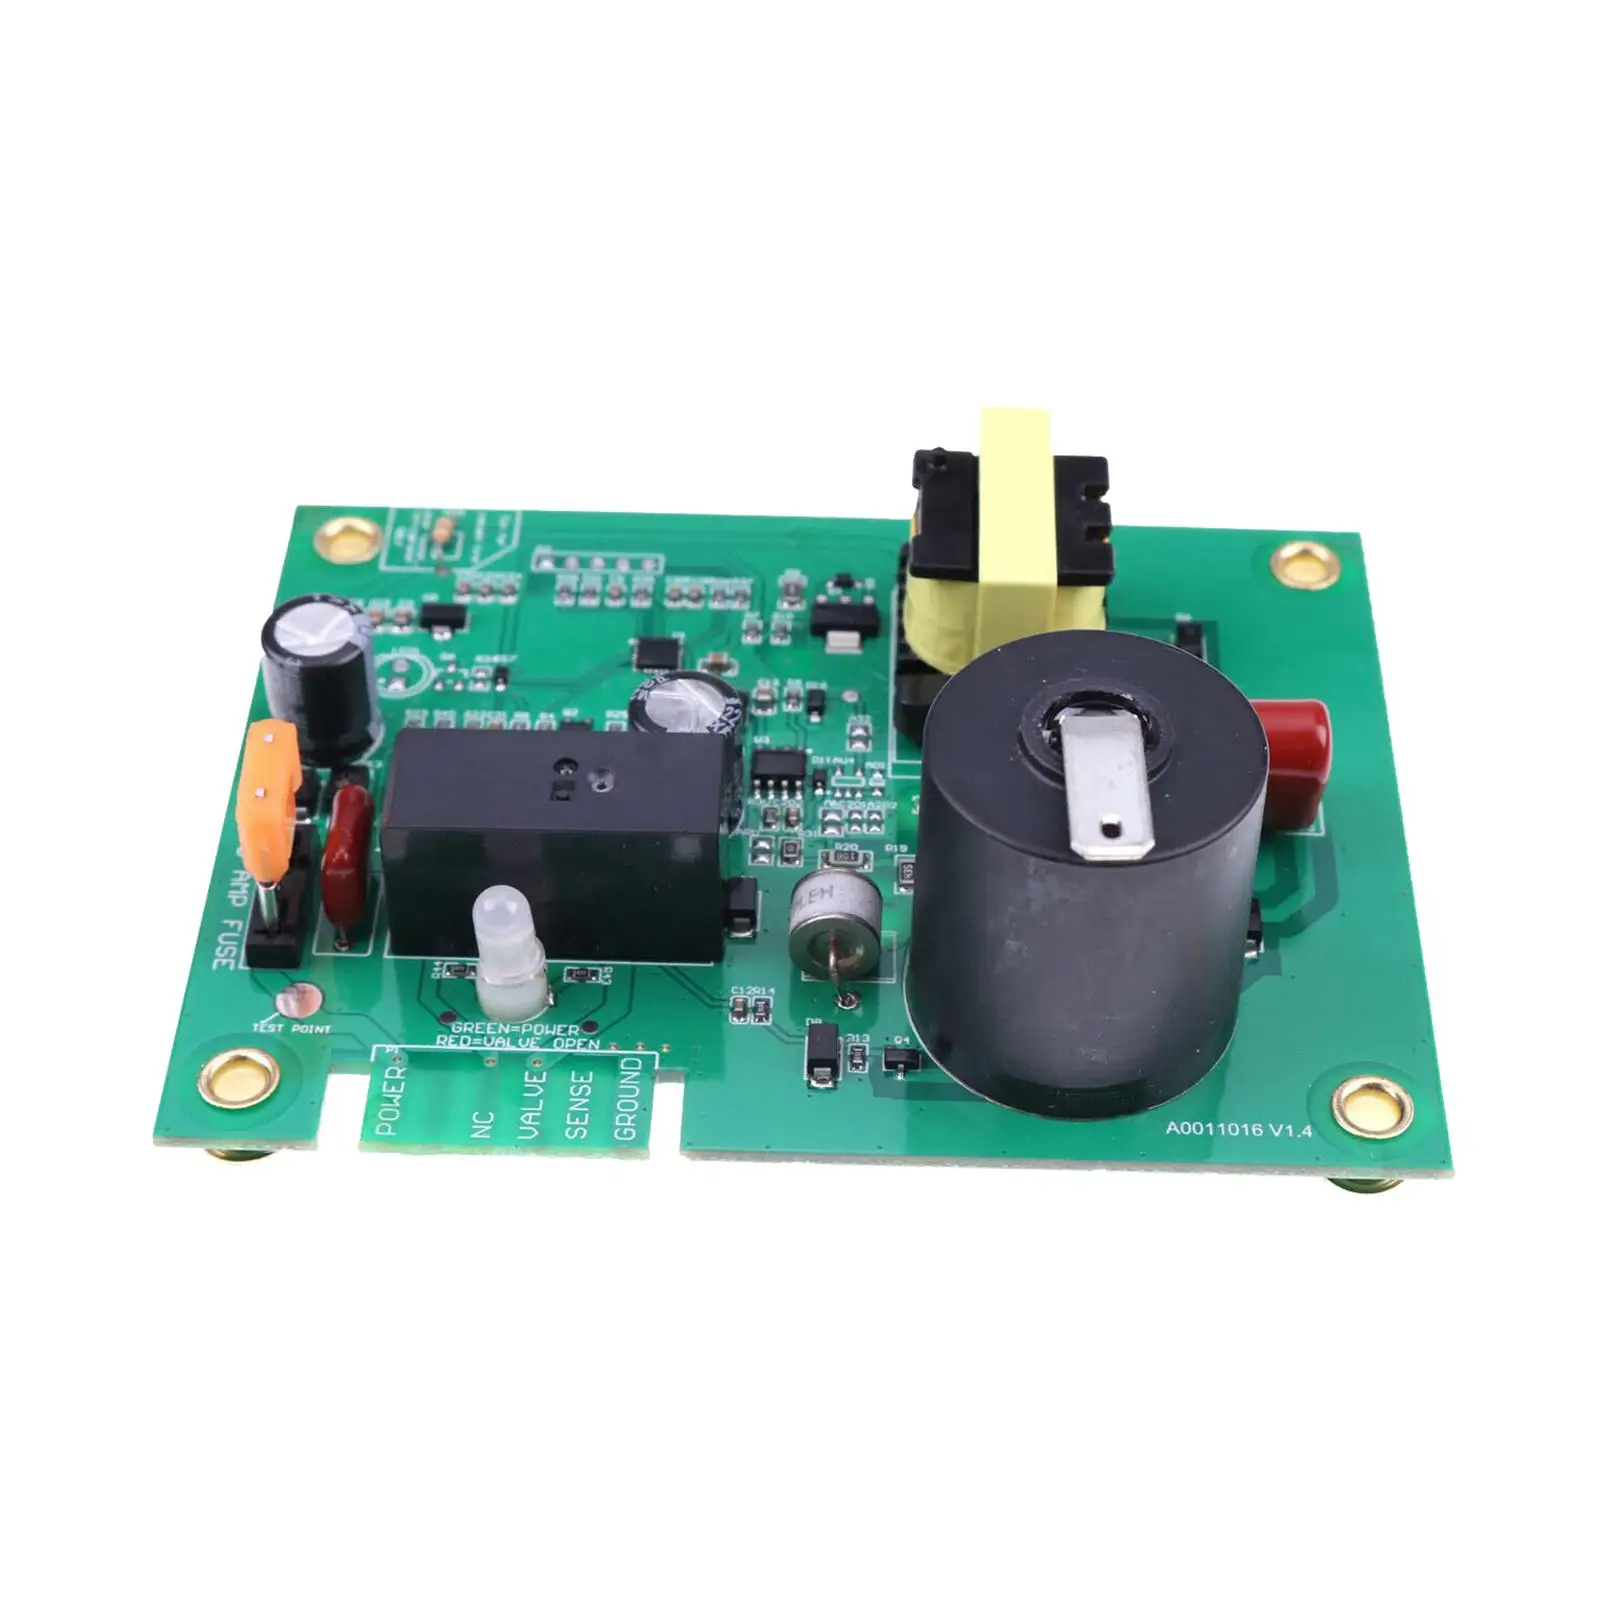 Ignition Control Circuit Board Uib S Board DC 12V Replacement Water Heater Control Circuit Board Sturdy Electronics Accessories